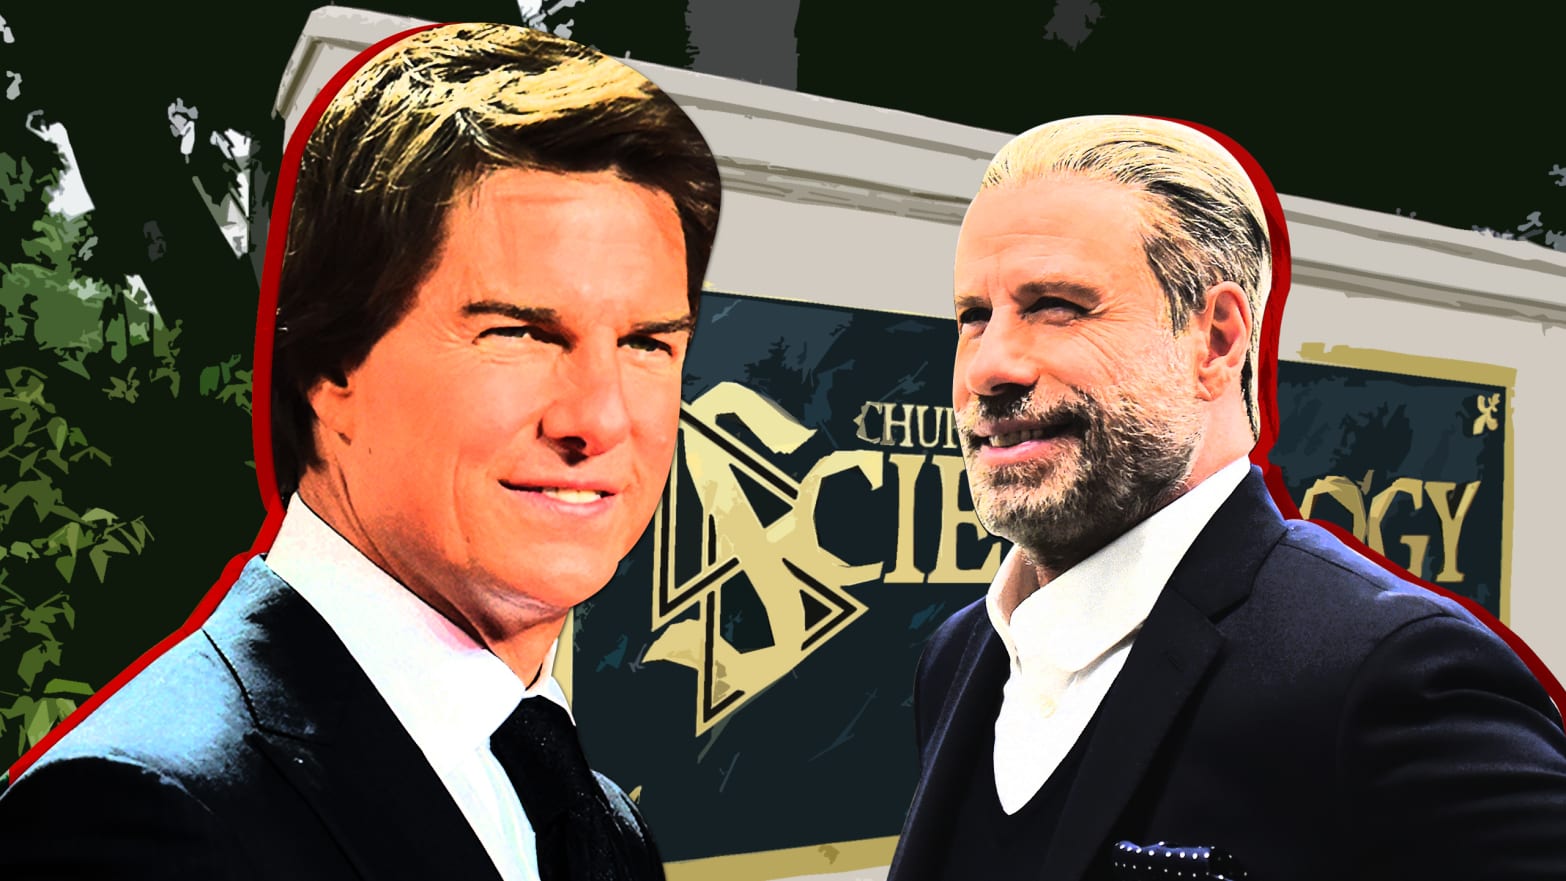 Best Nudist Cruises - Inside Tom Cruise and John Travolta's Scientology Feud